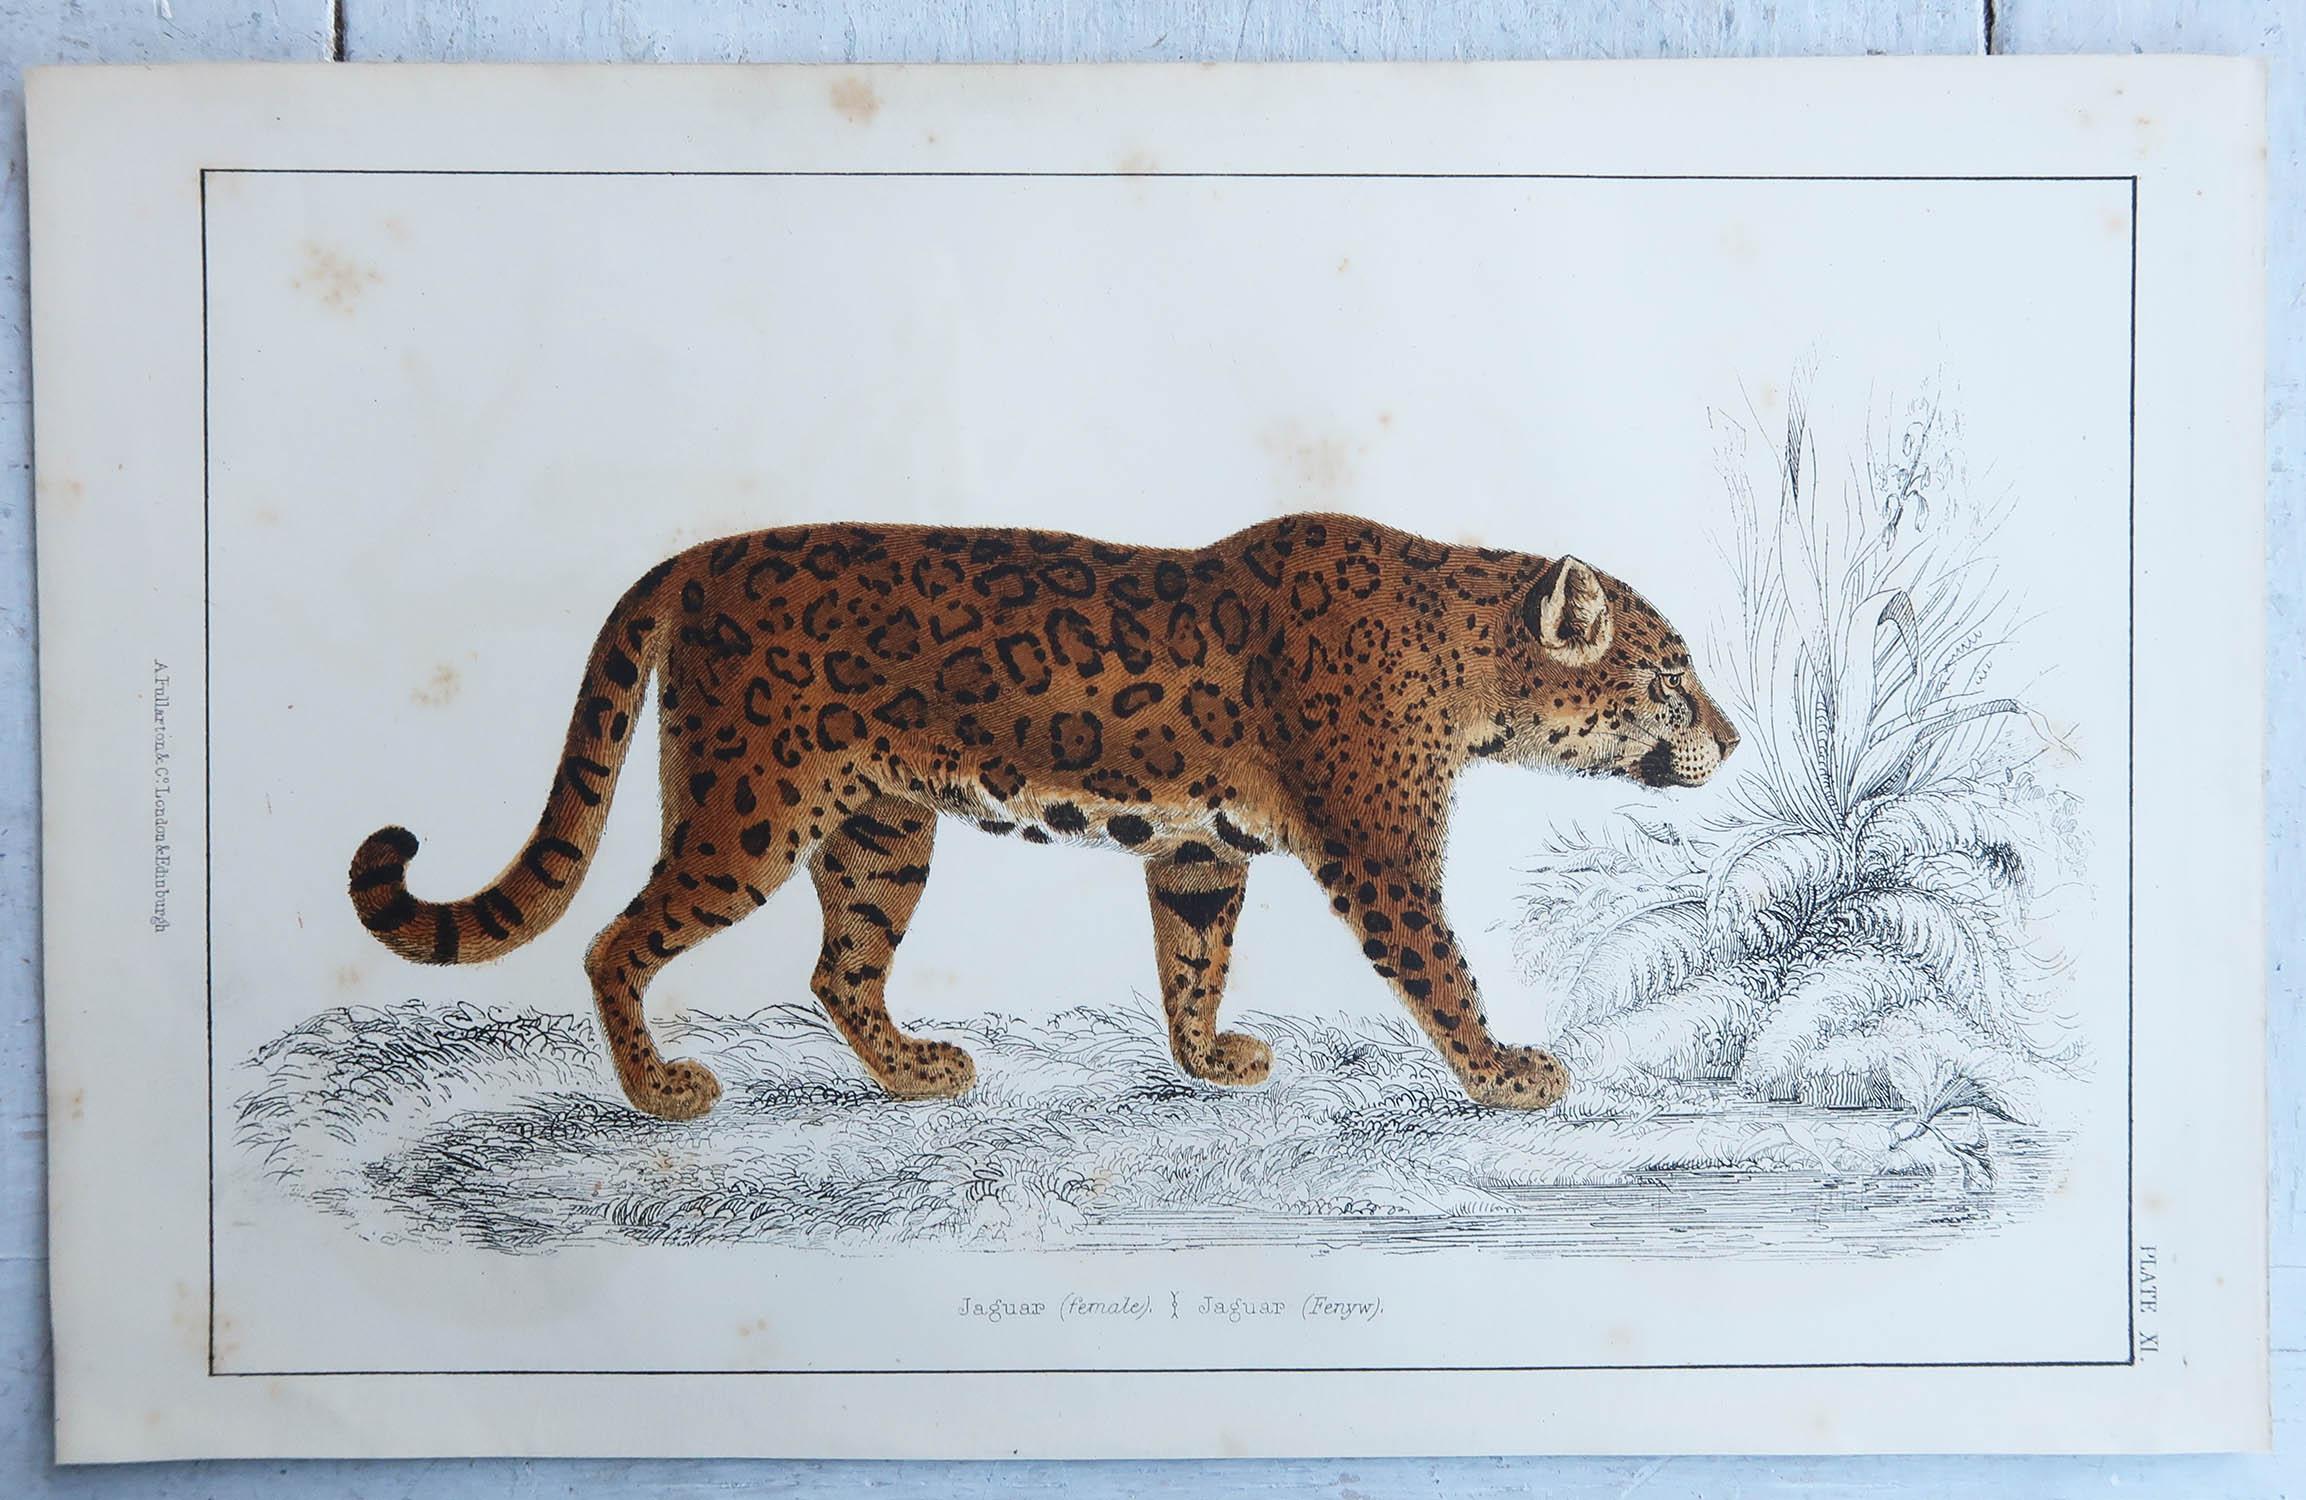 where did the jaguar originate from